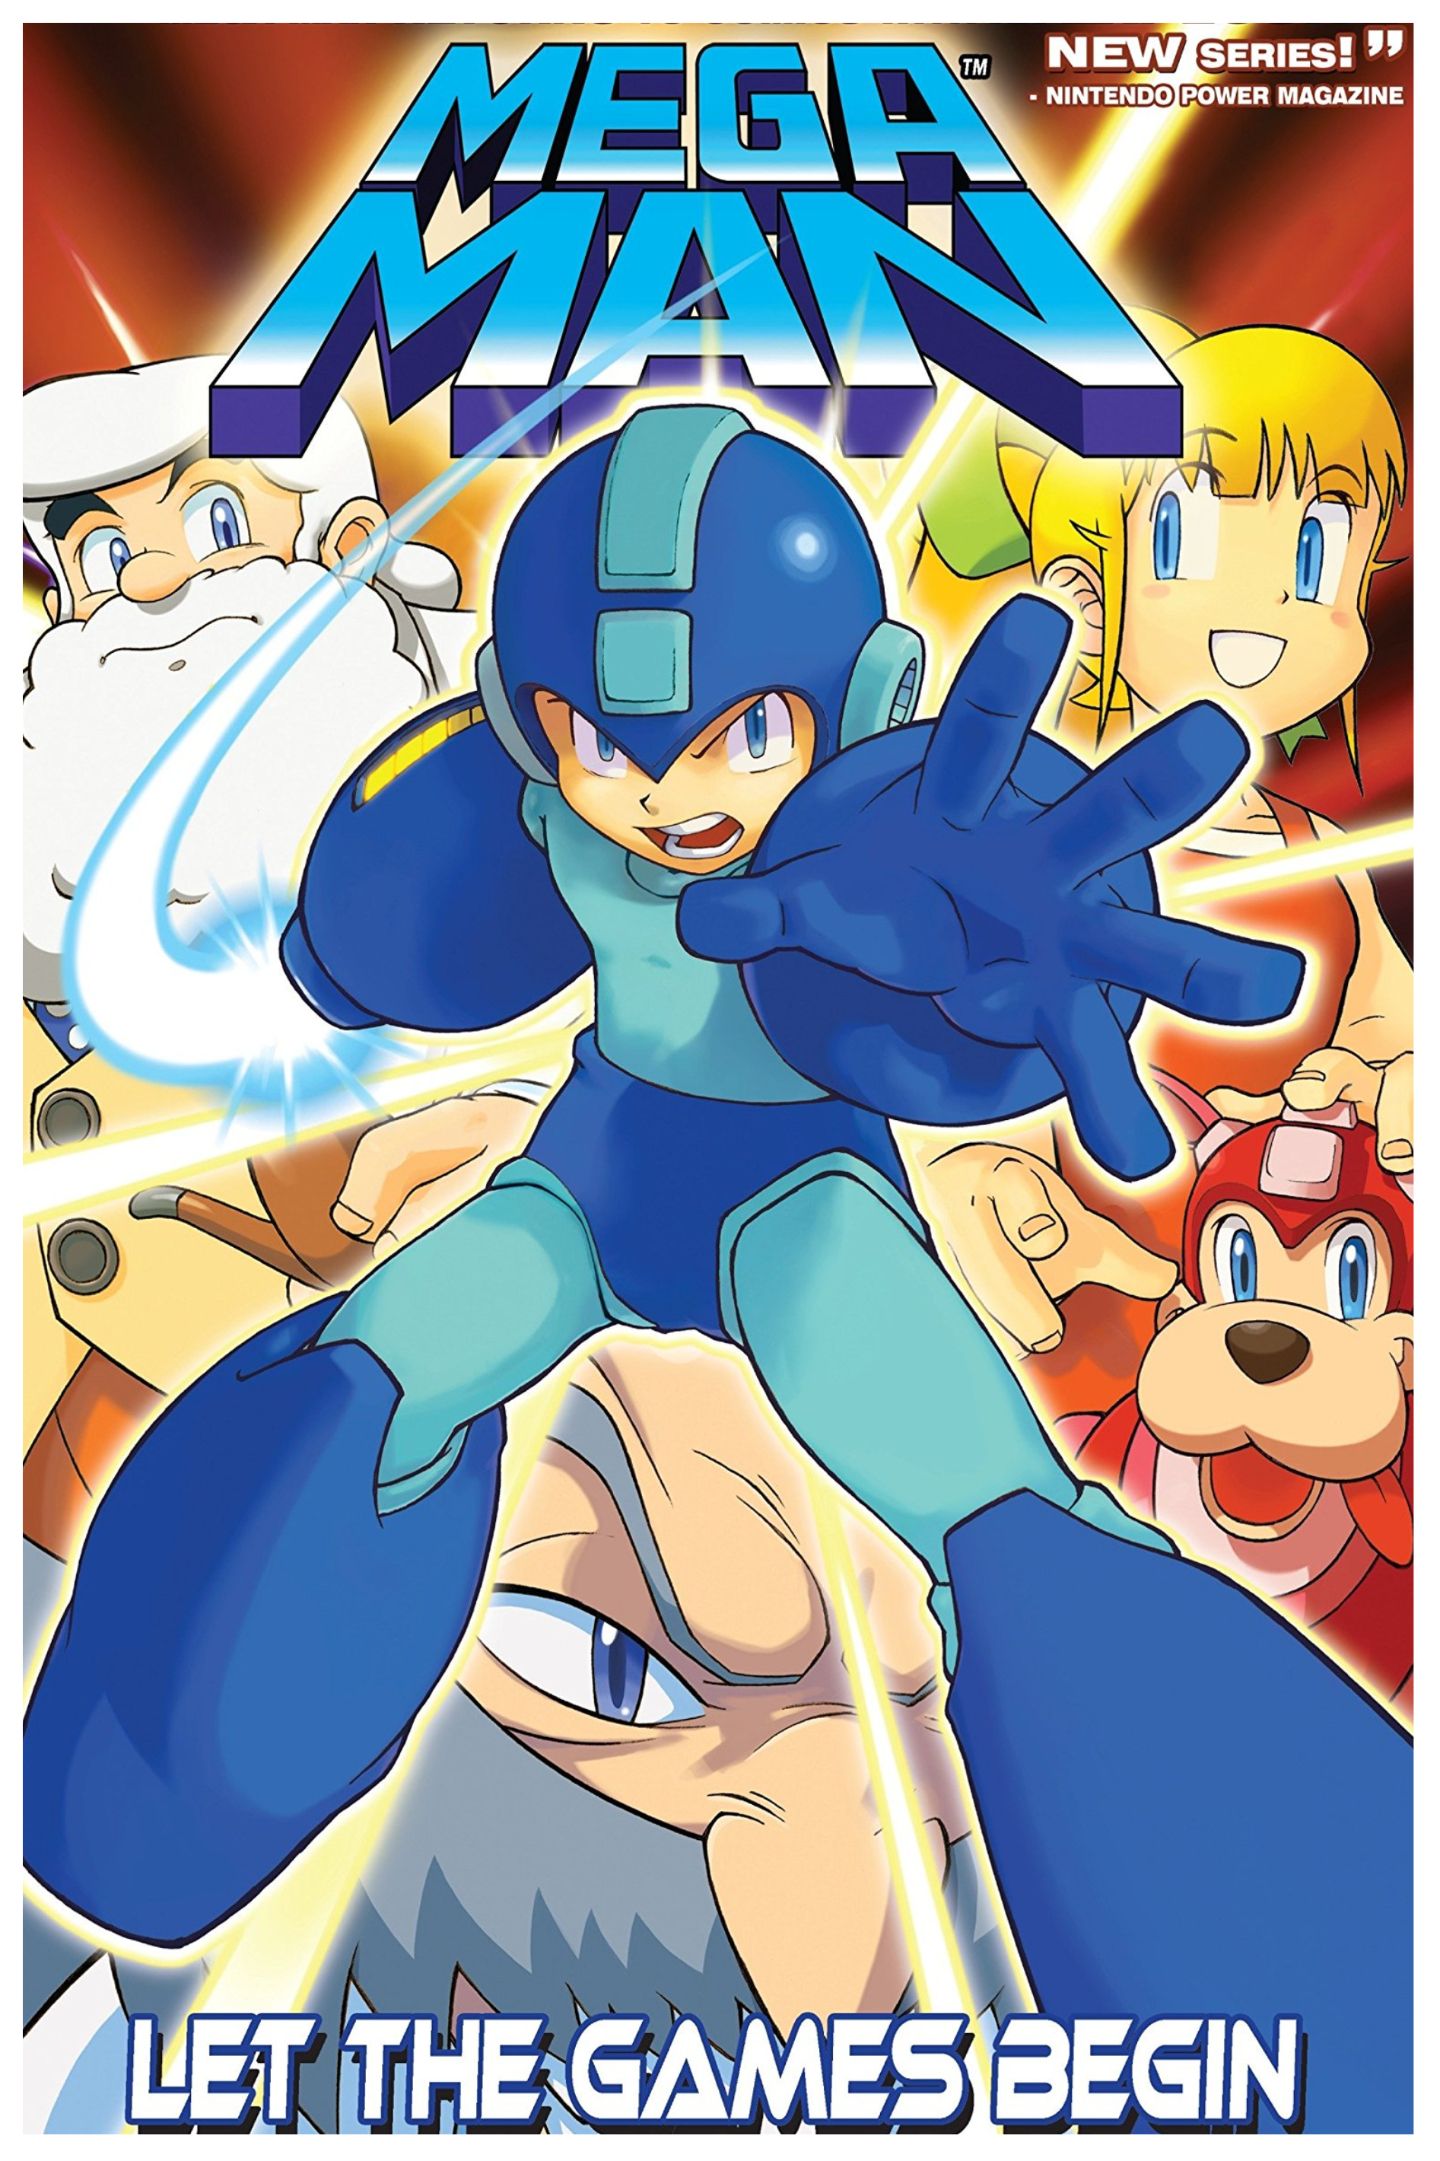 Mega Man Comic 1 got the games started